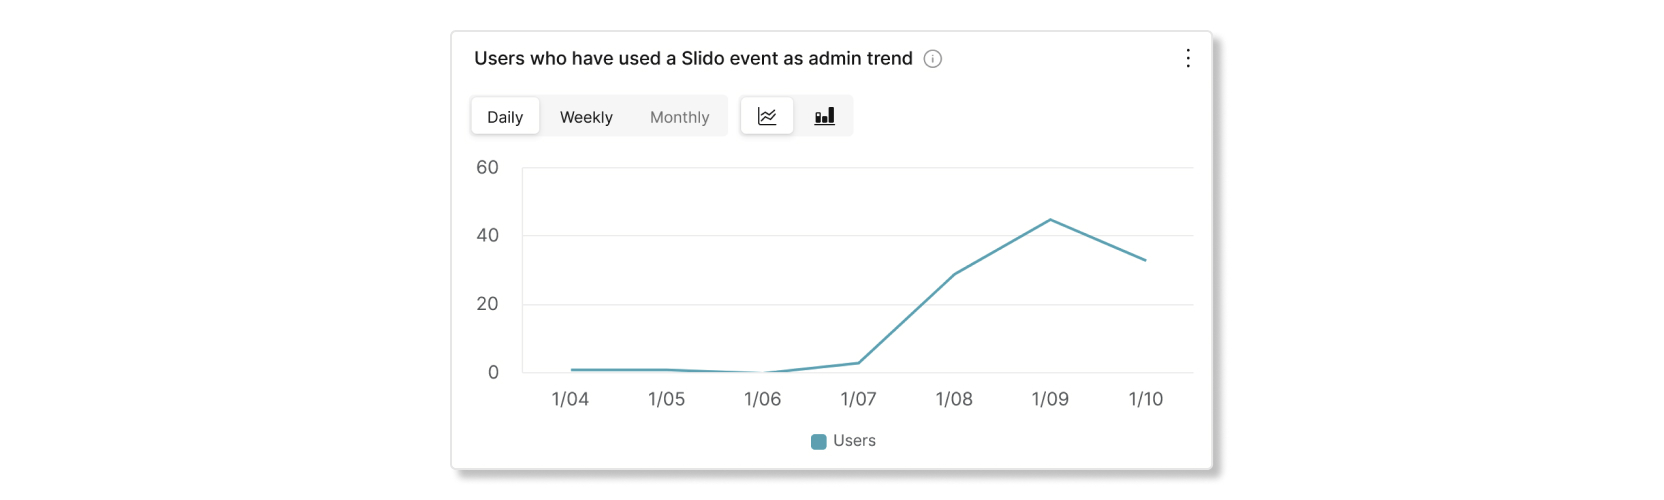 Control Hub Slido 分析で管理傾向チャートとしてSlido イベントを使用したユーザー